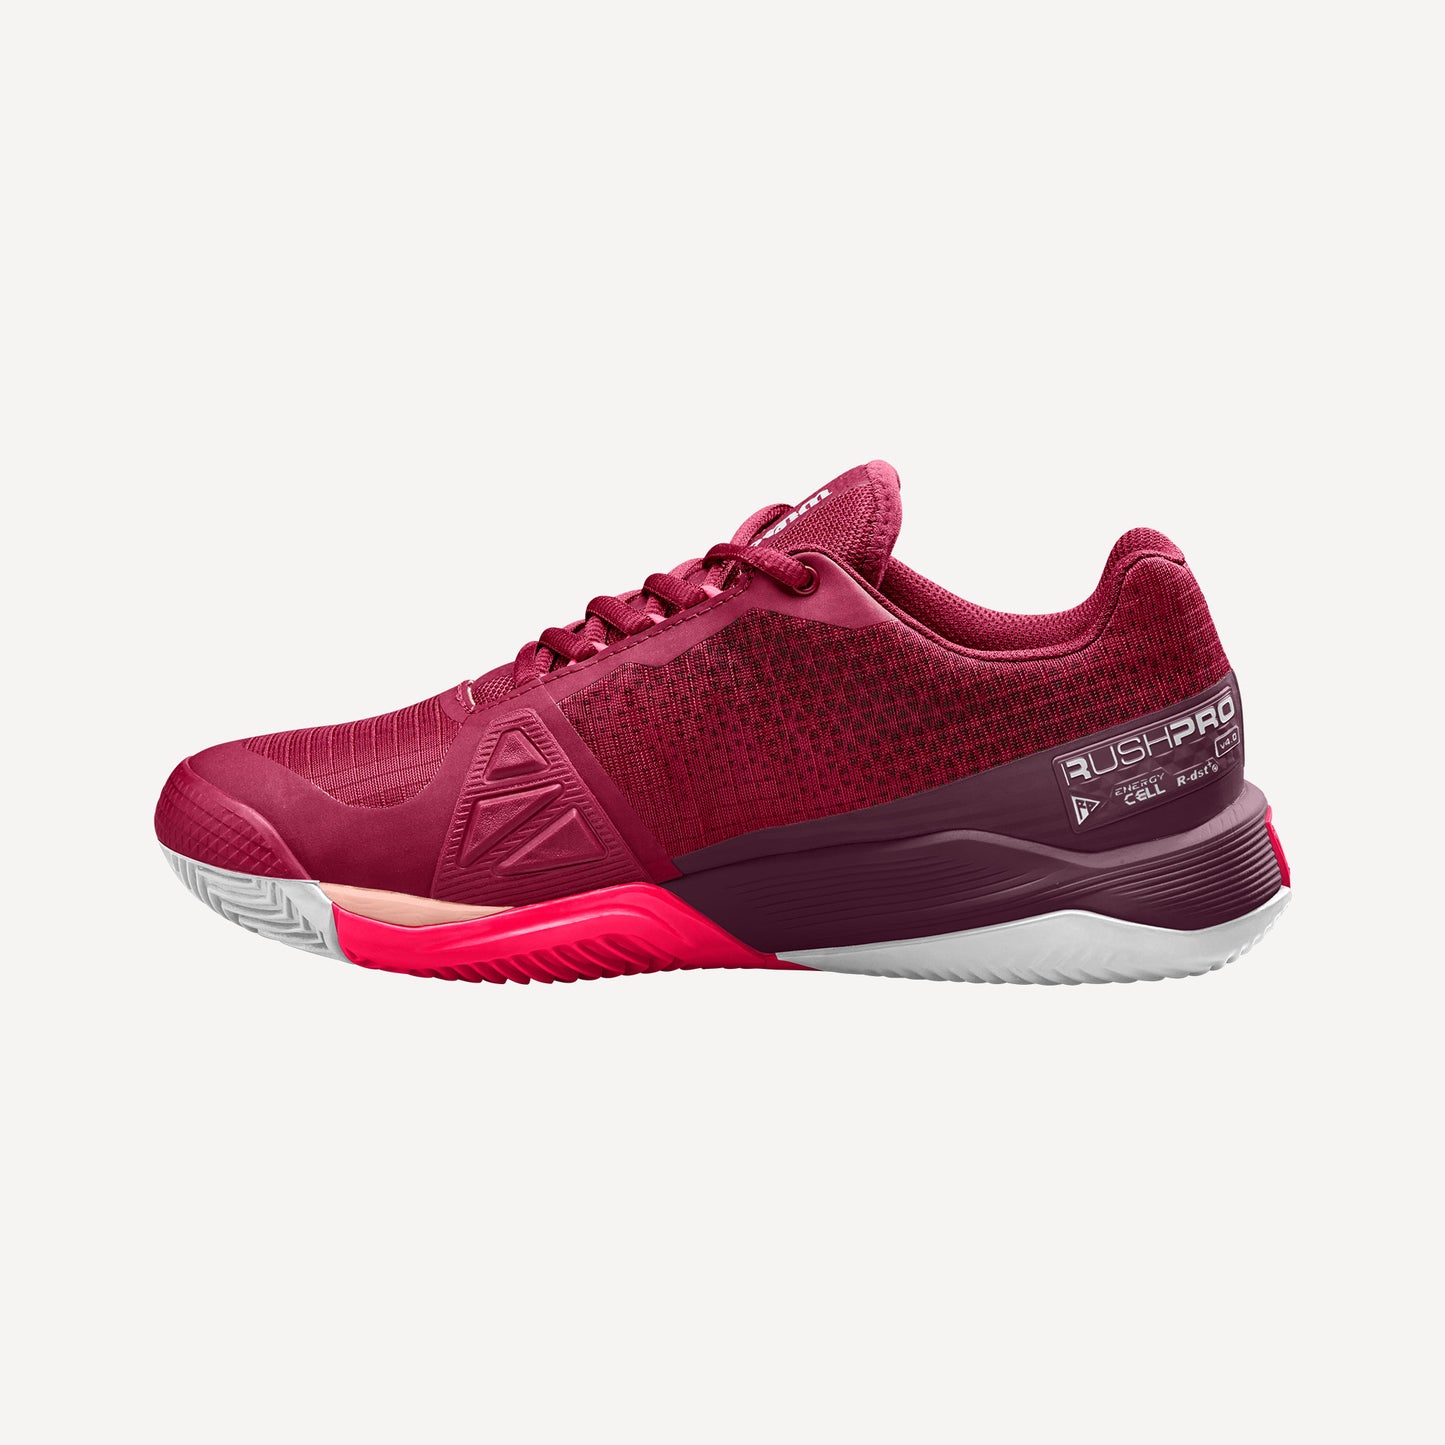 Wilson Rush Pro 4.0 Women's Clay Court Tennis Shoes Red (3)